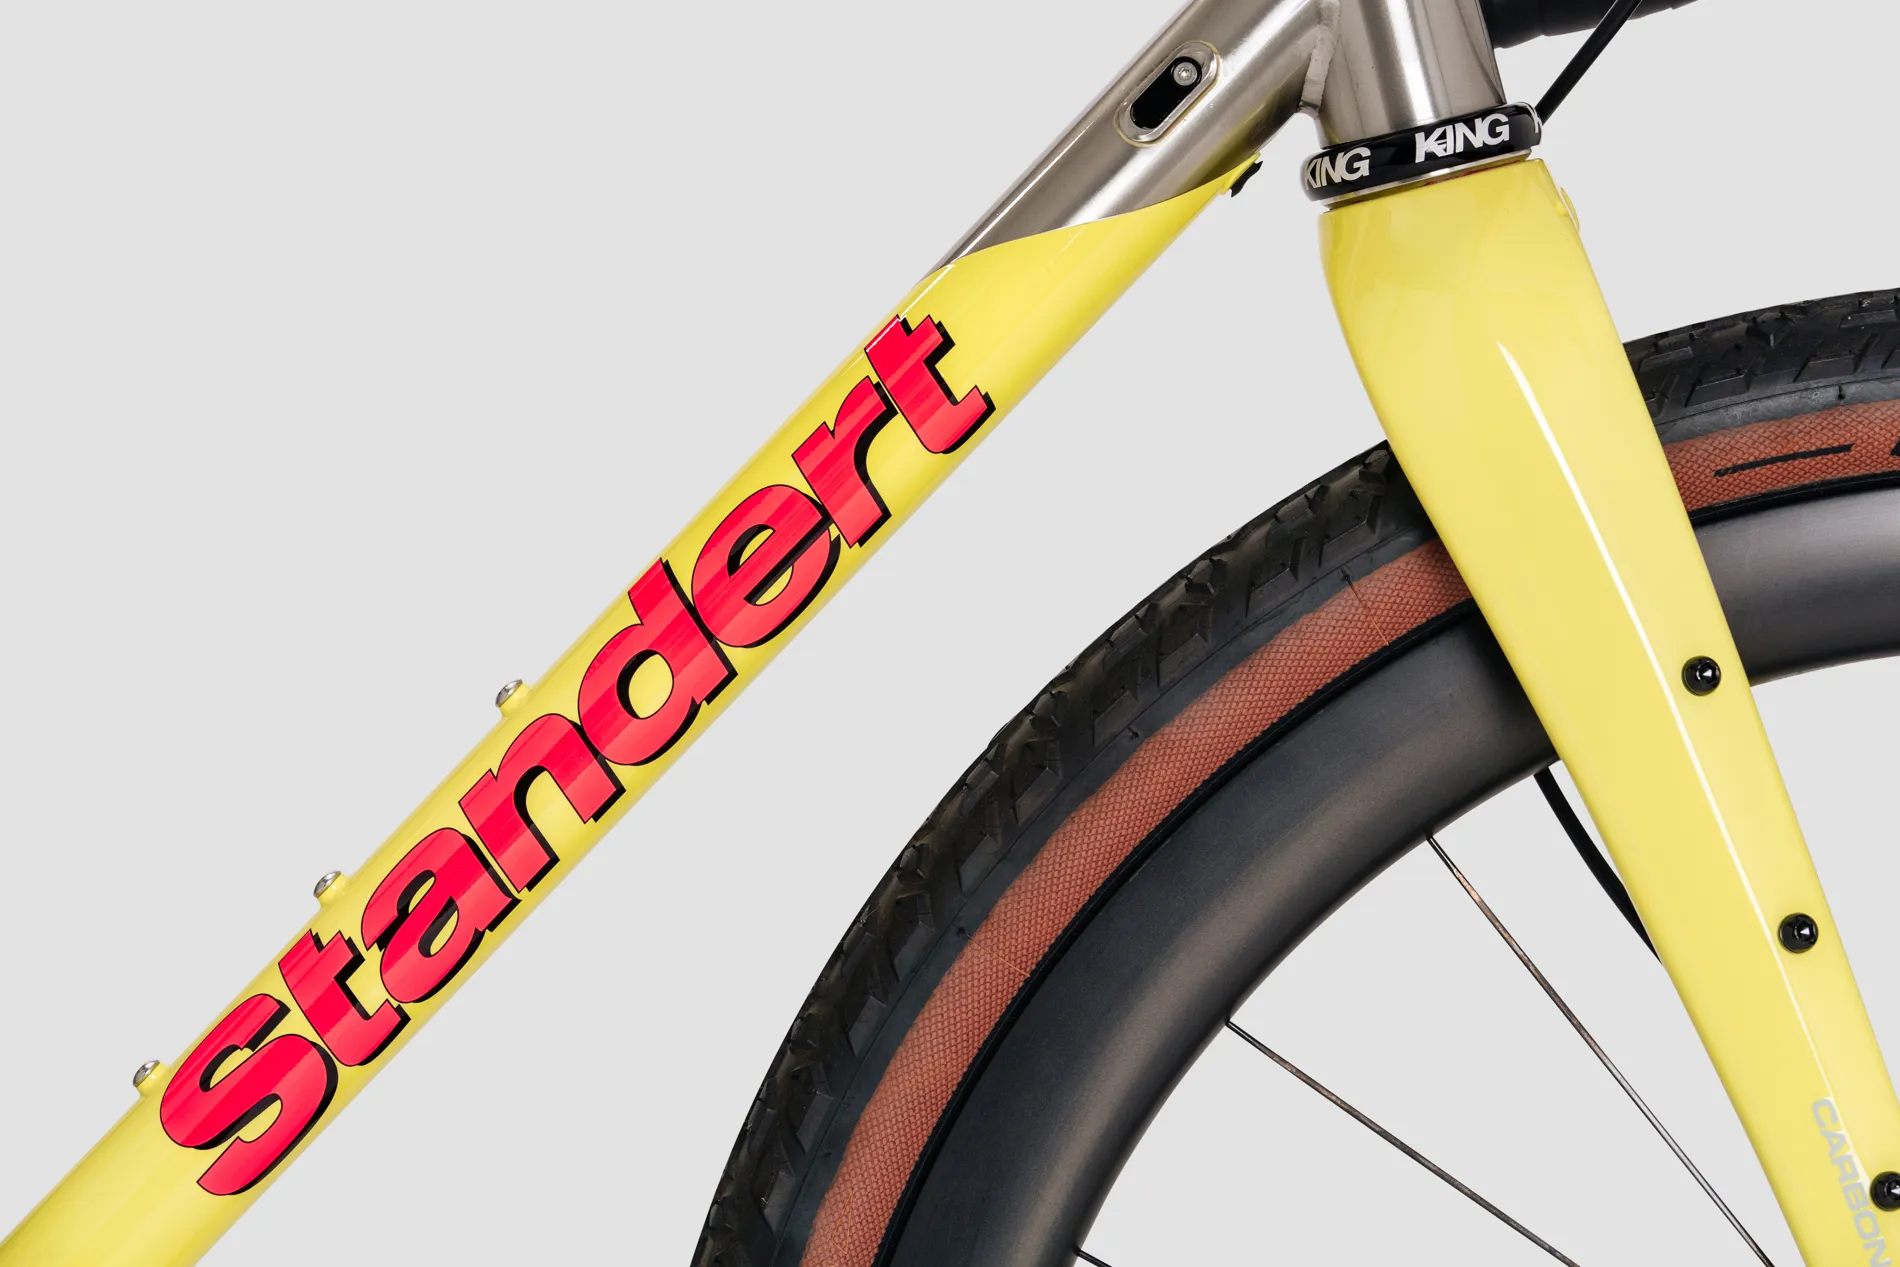 Downtube of Erdgeschoss gravel bike in yellow colour